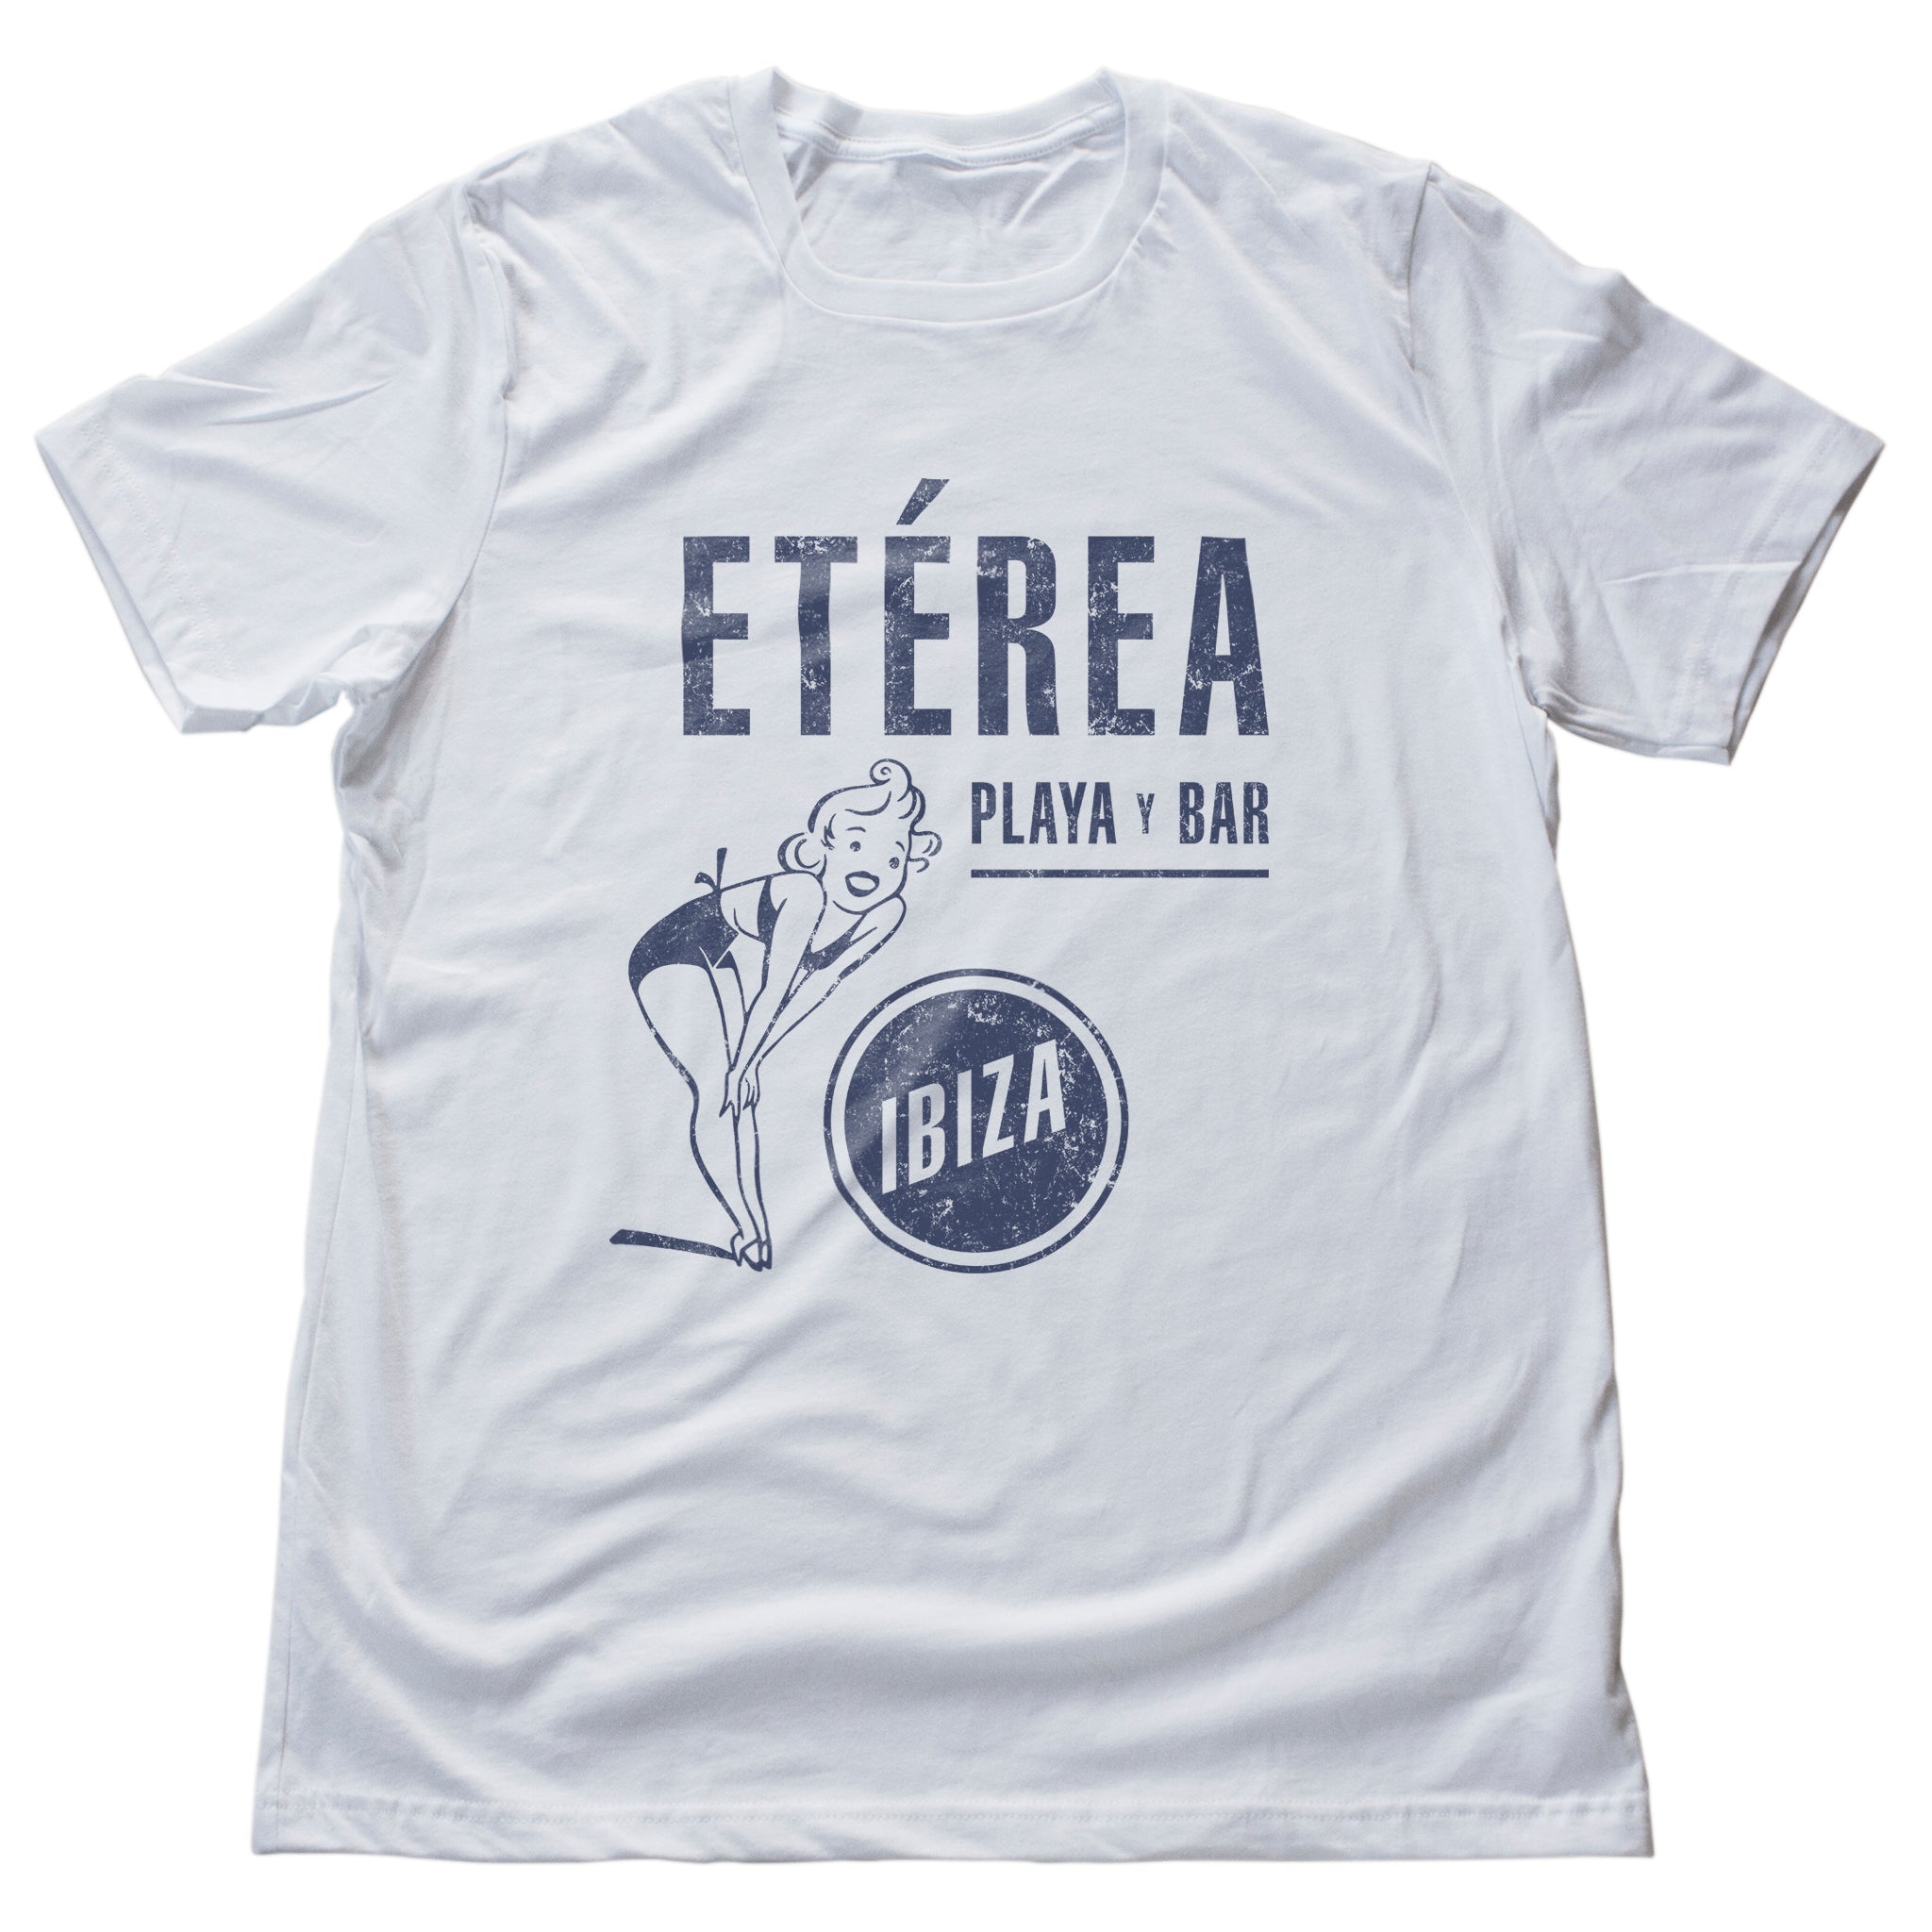 ETHEREAL IBIZA Beach and Bar — IBIZA Spain — retro fiction unisex t-shirt Active